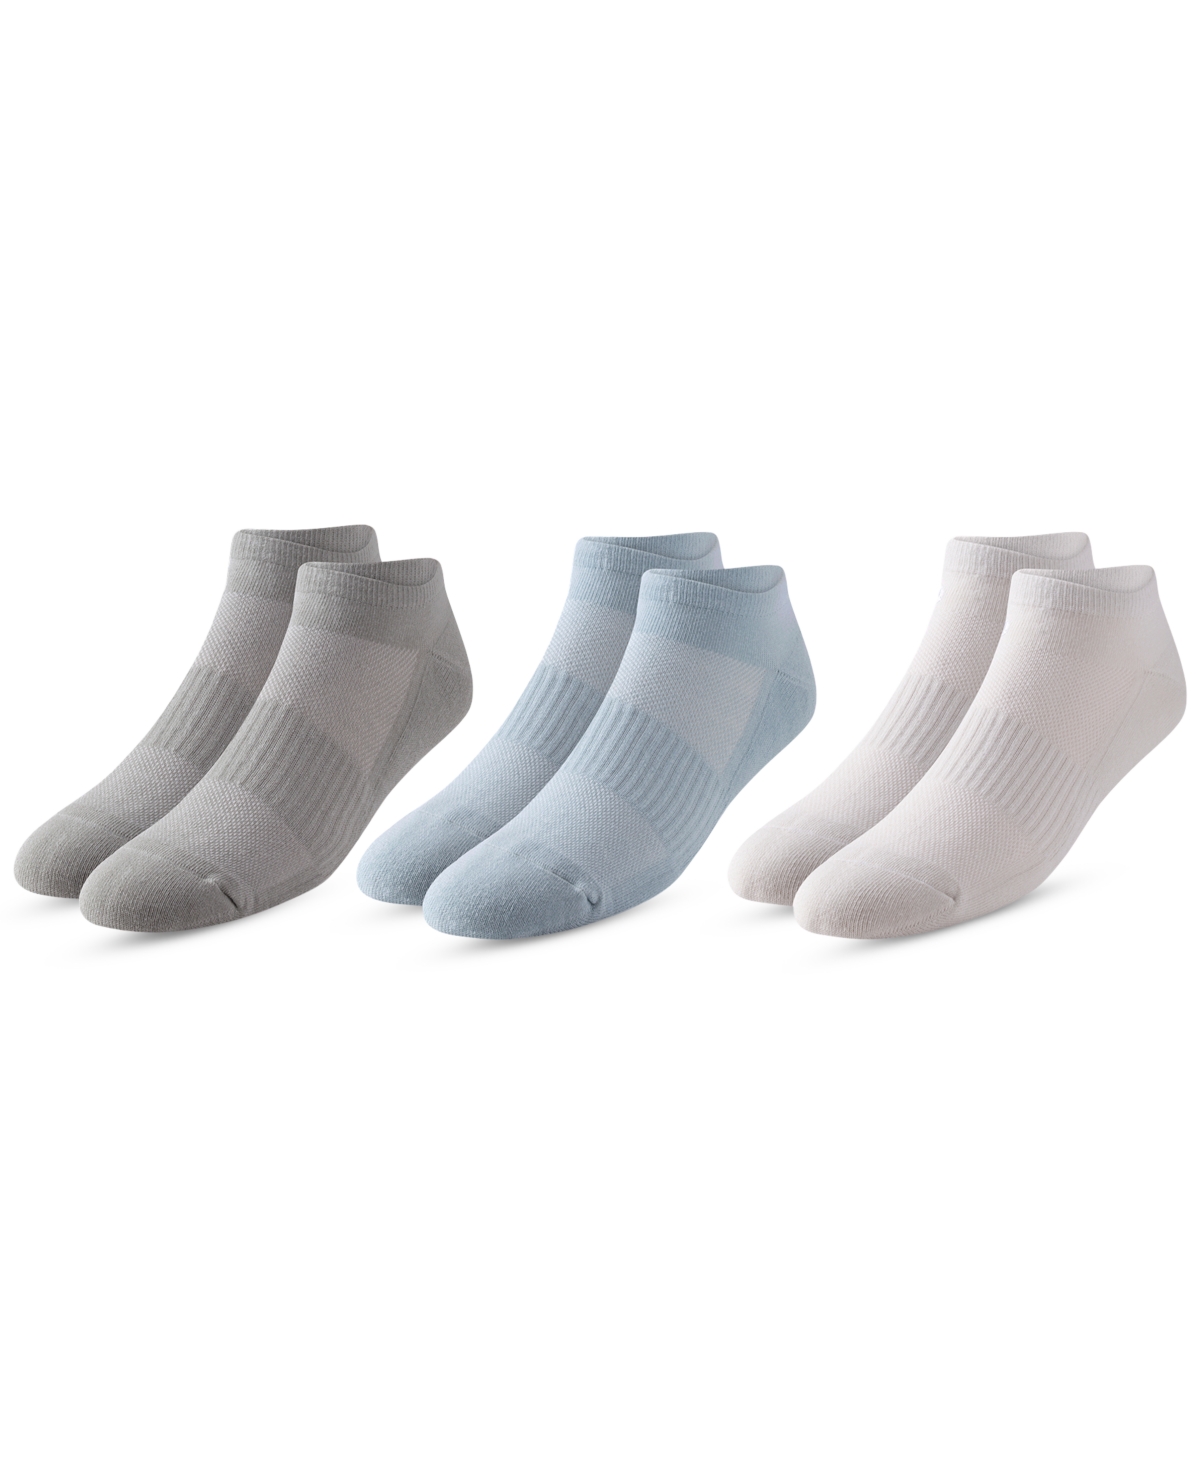 Men's Cushion Cotton Low Cut Socks 3 Pack - Blush